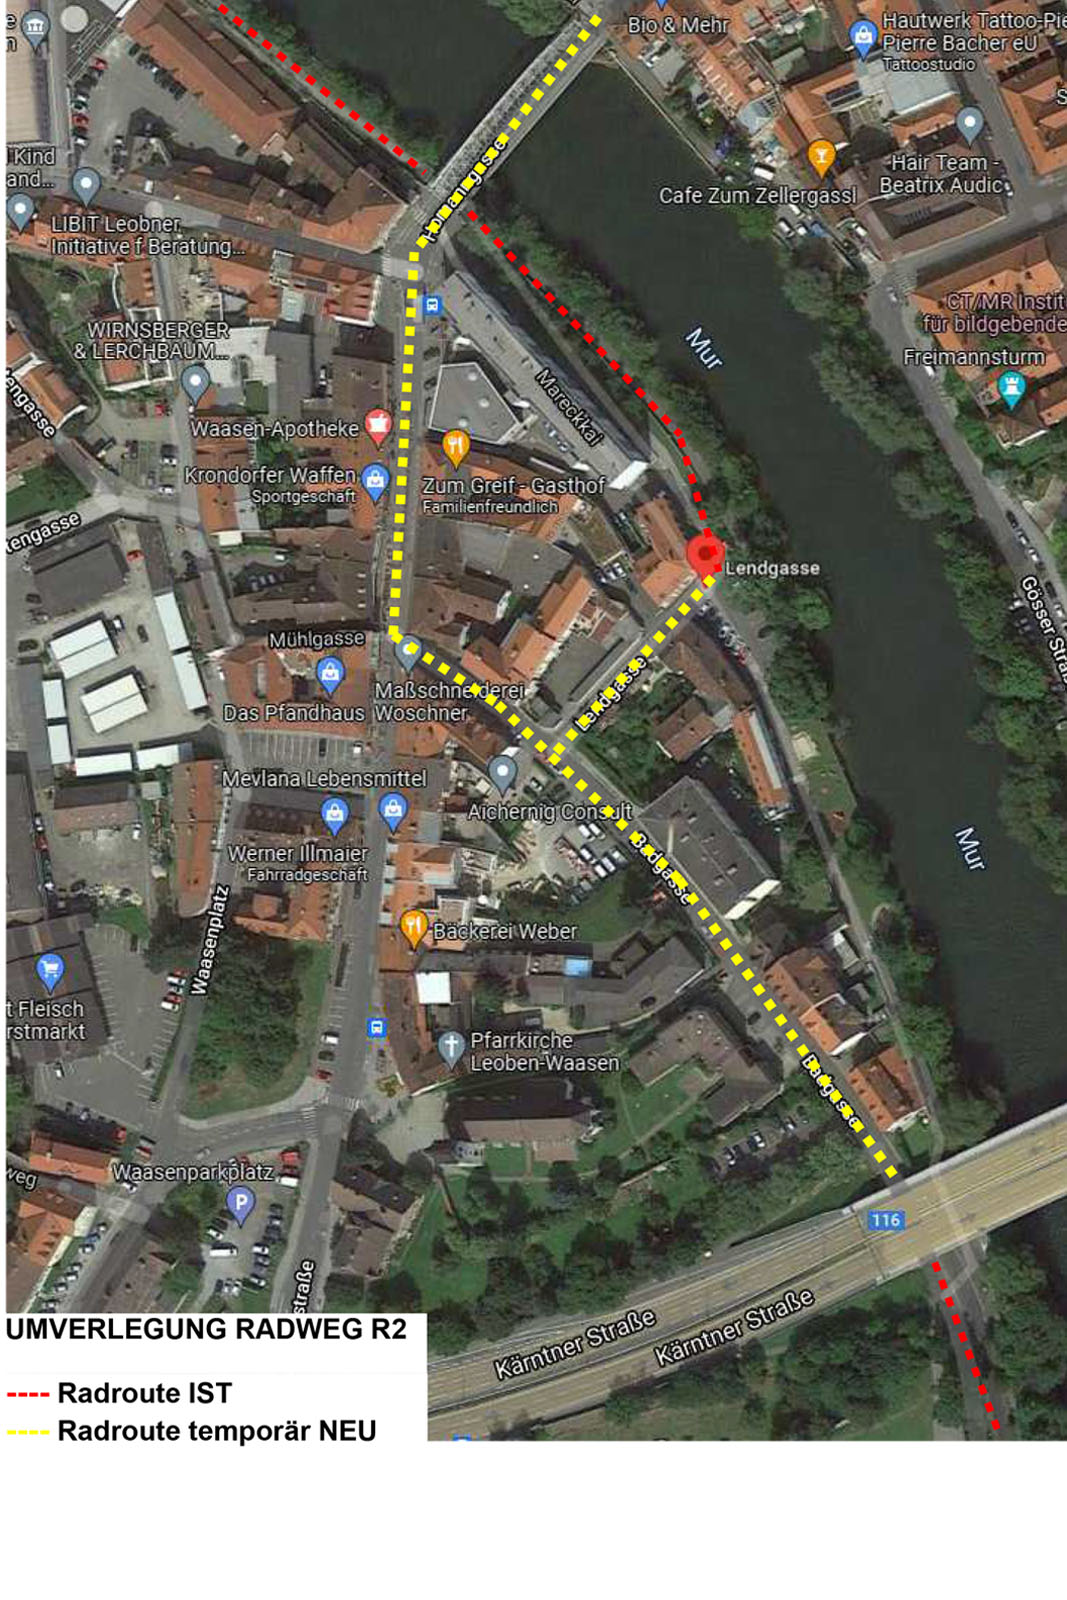 Abbildung Umleitung Radweg via Google Maps